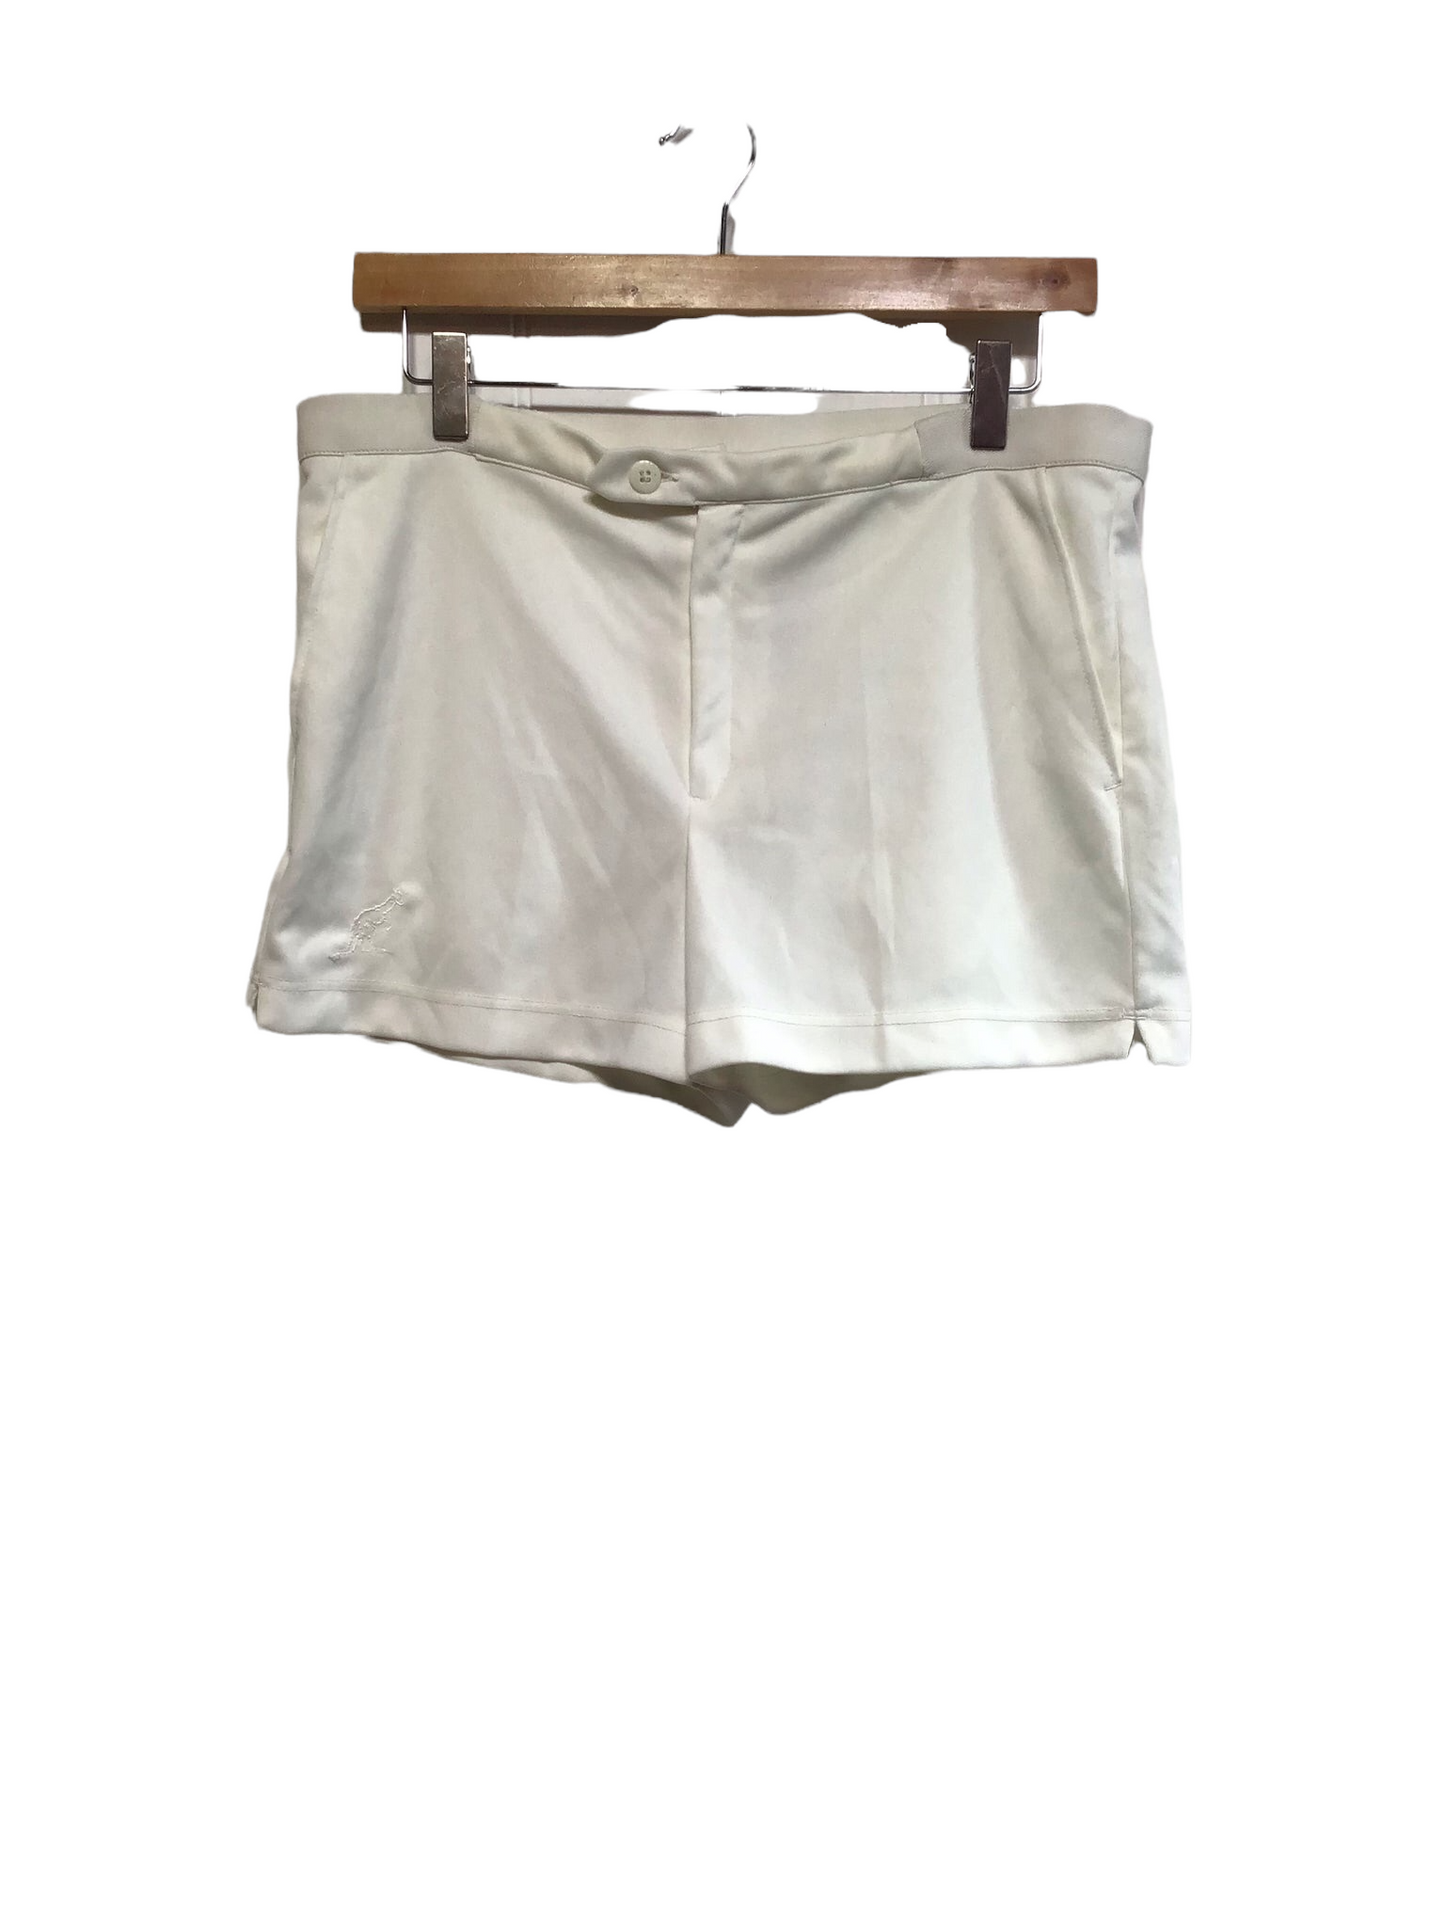 White Polyester Tennis Shorts (Size M)